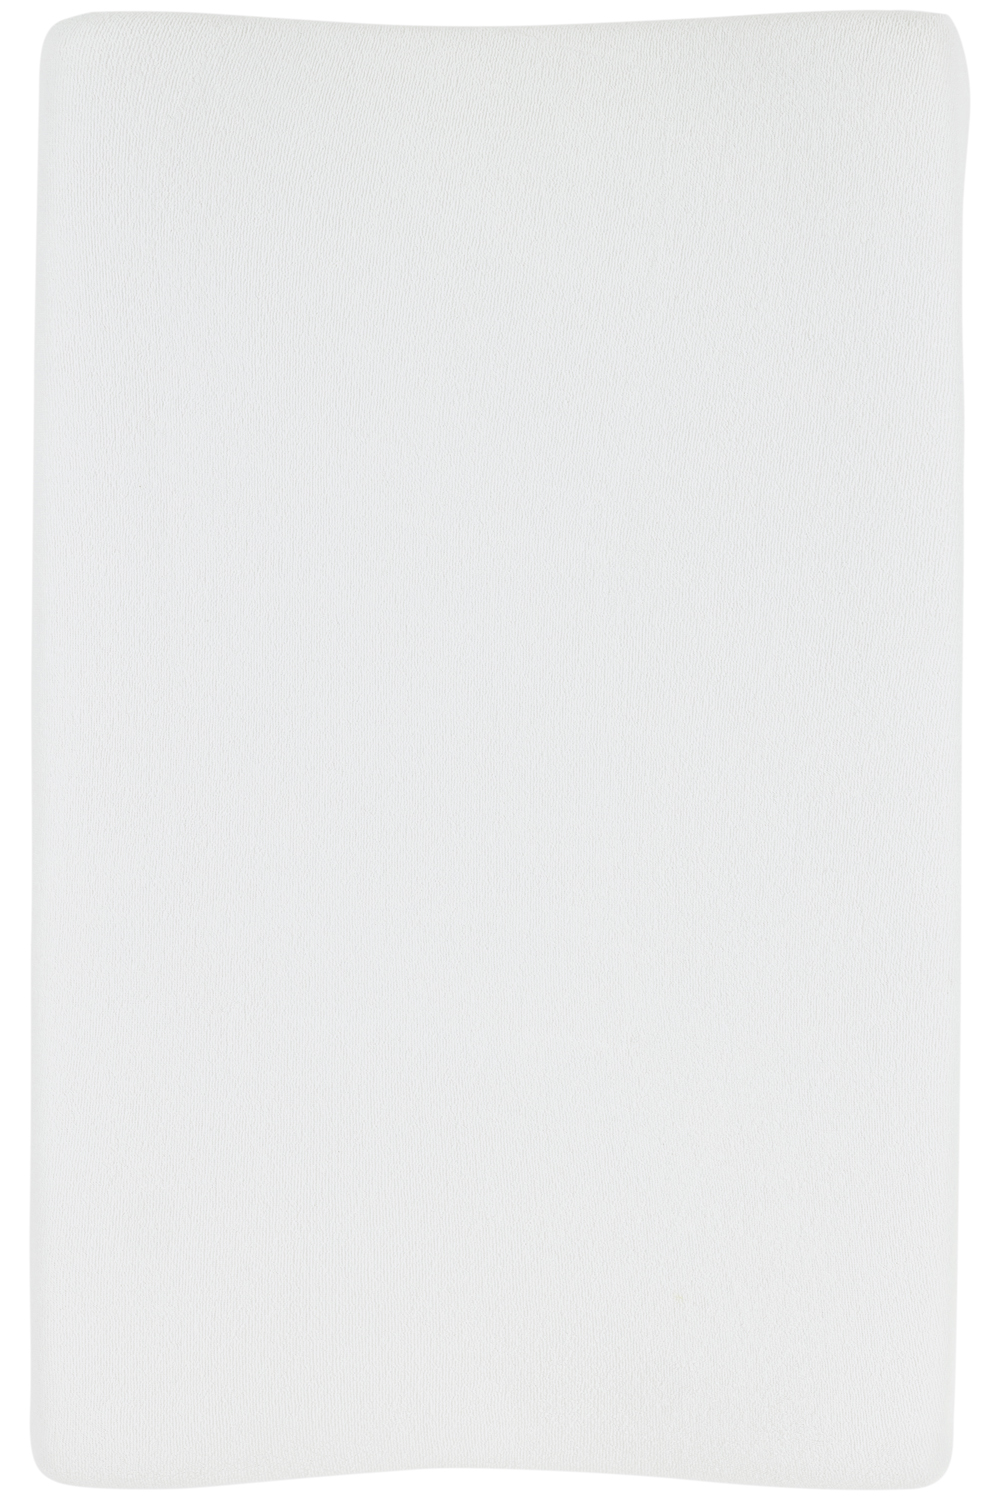 Wickelauflagenbezug 2er pack frottee Uni - white - 50x70cm